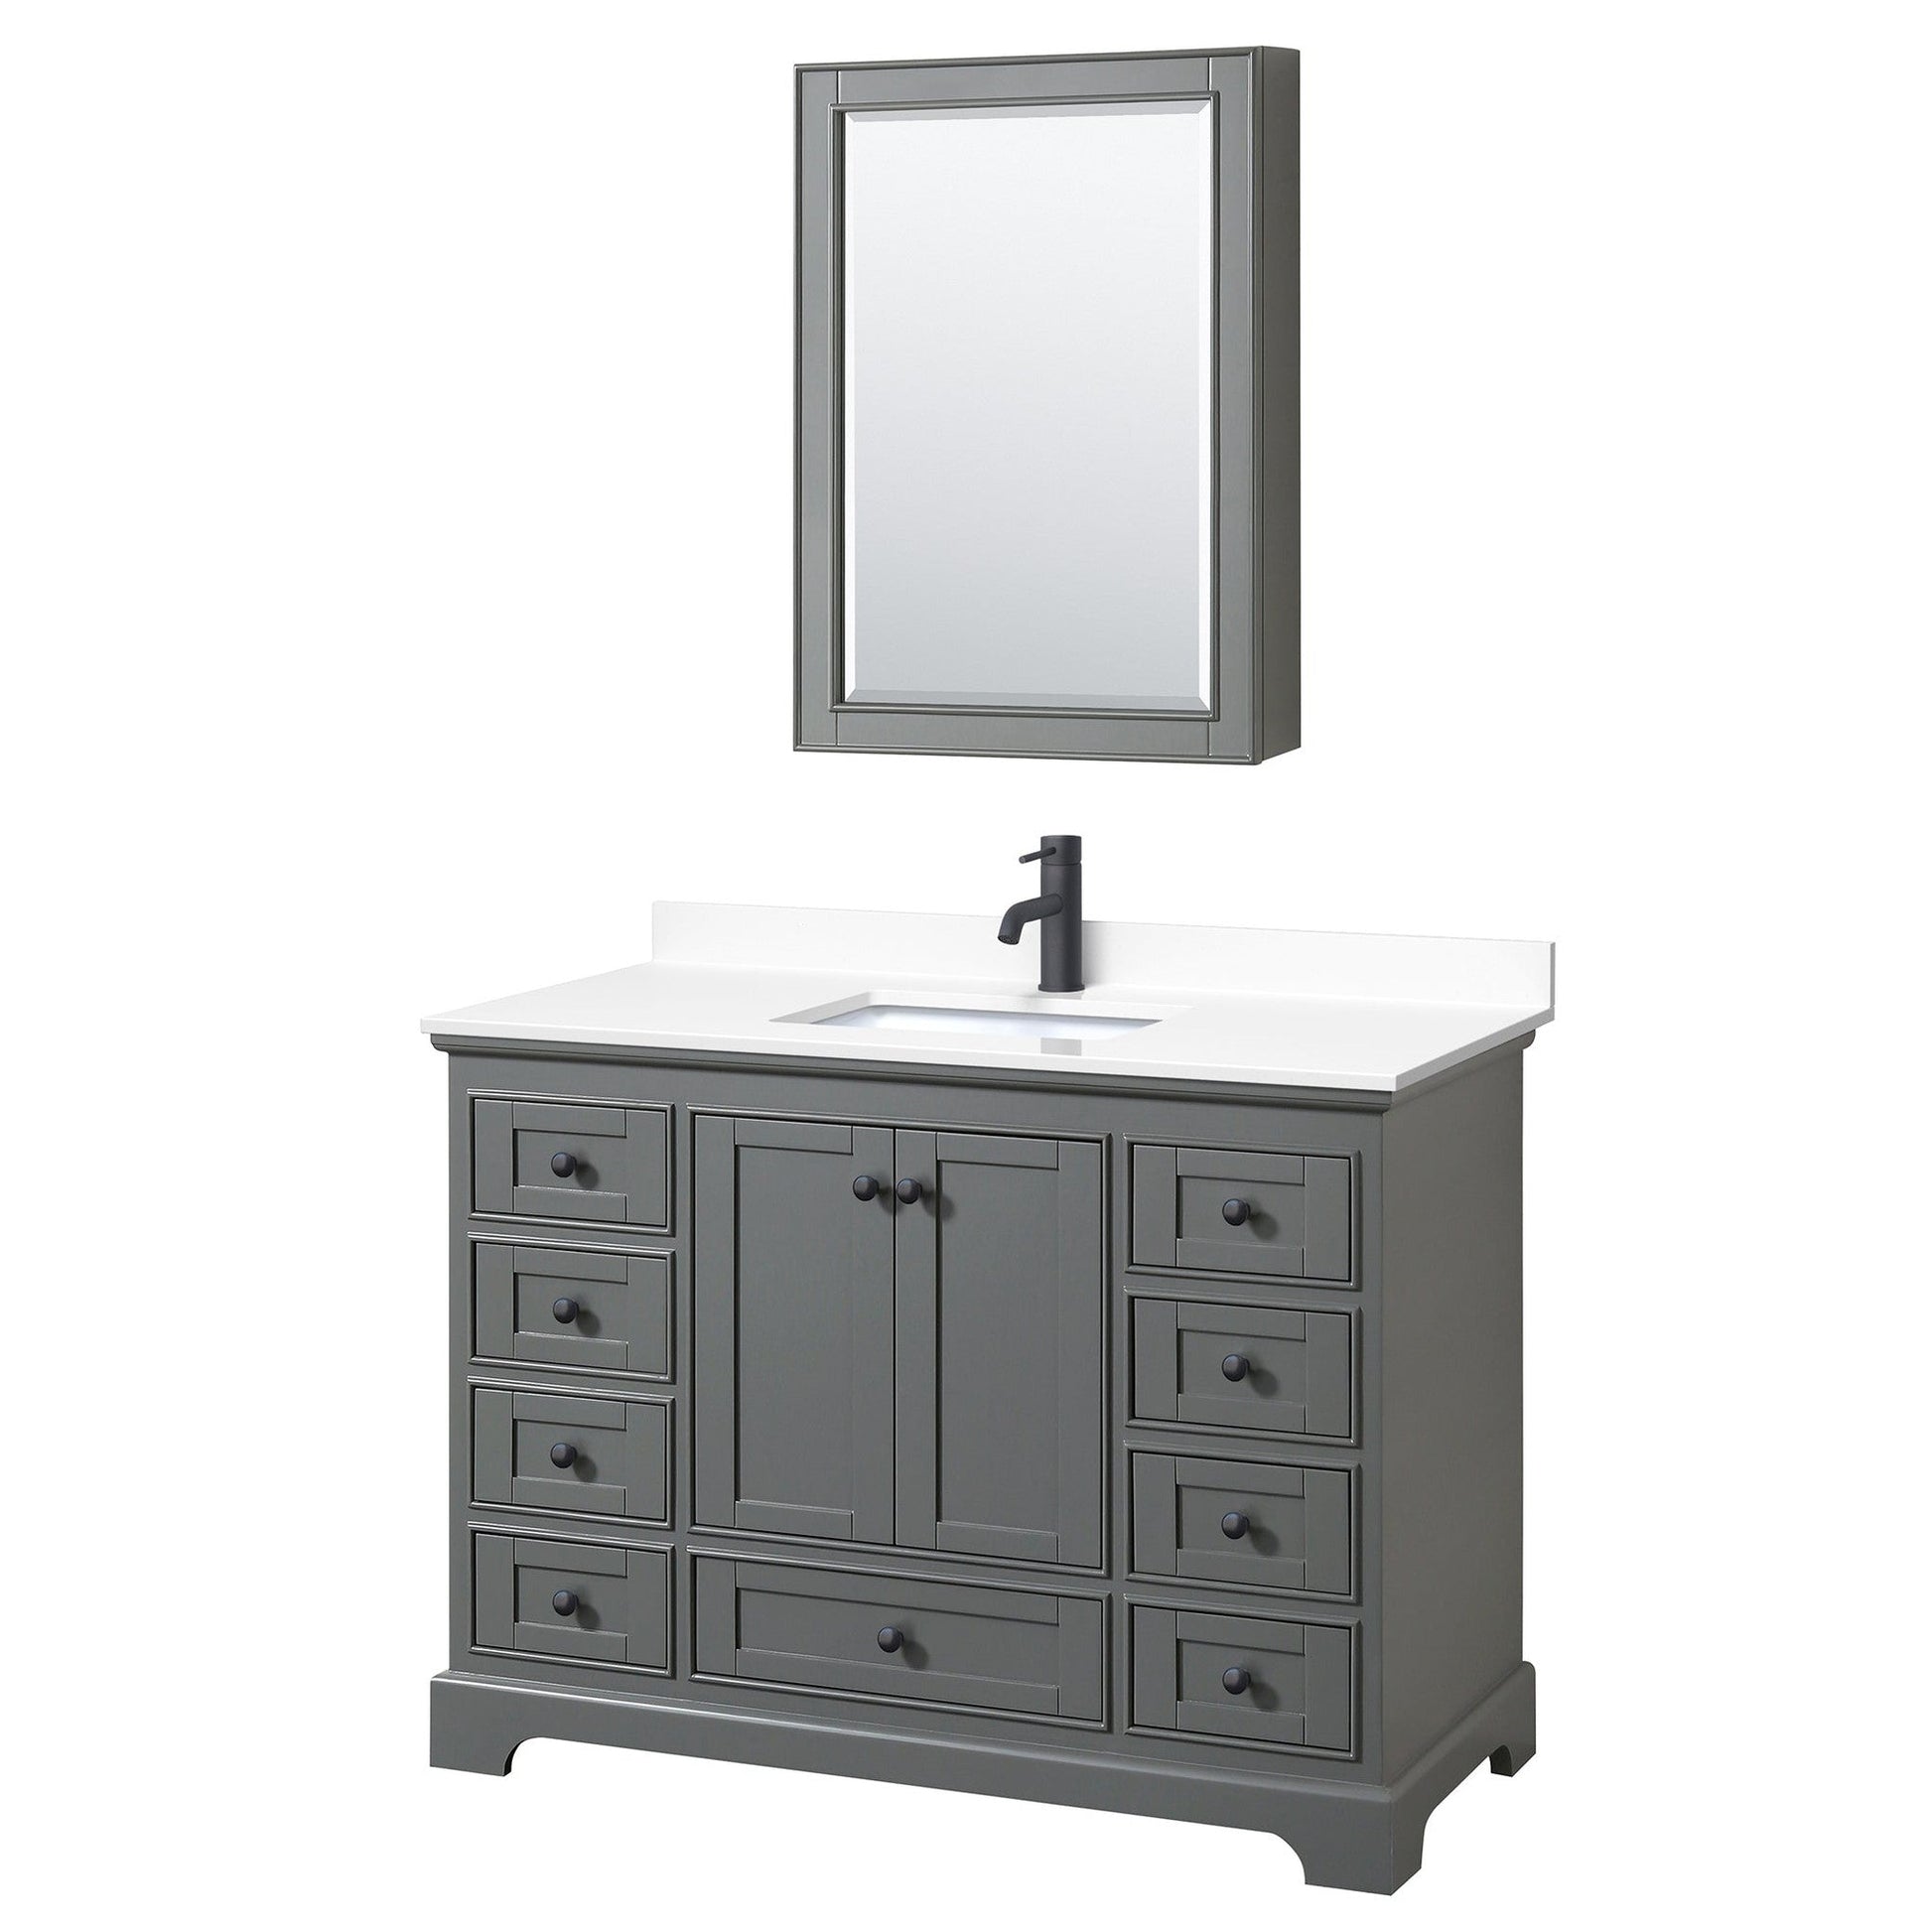 Deborah 48" Single Bathroom Vanity in Dark Gray, White Cultured Marble Countertop, Undermount Square Sink, Matte Black Trim, Medicine Cabinet